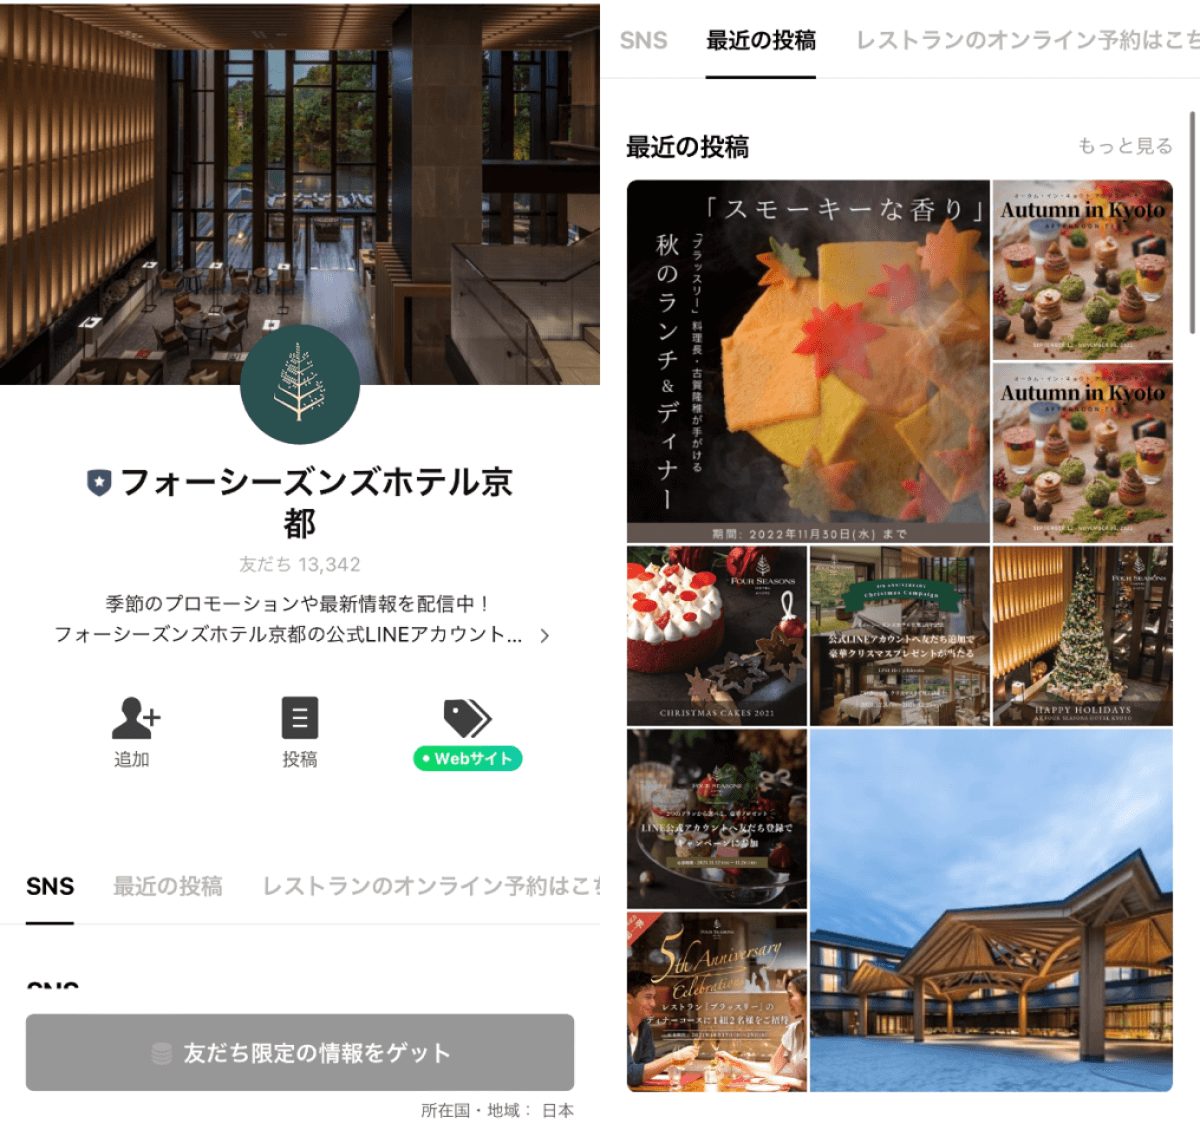 line-account-four-seasons-hotel-kyoto